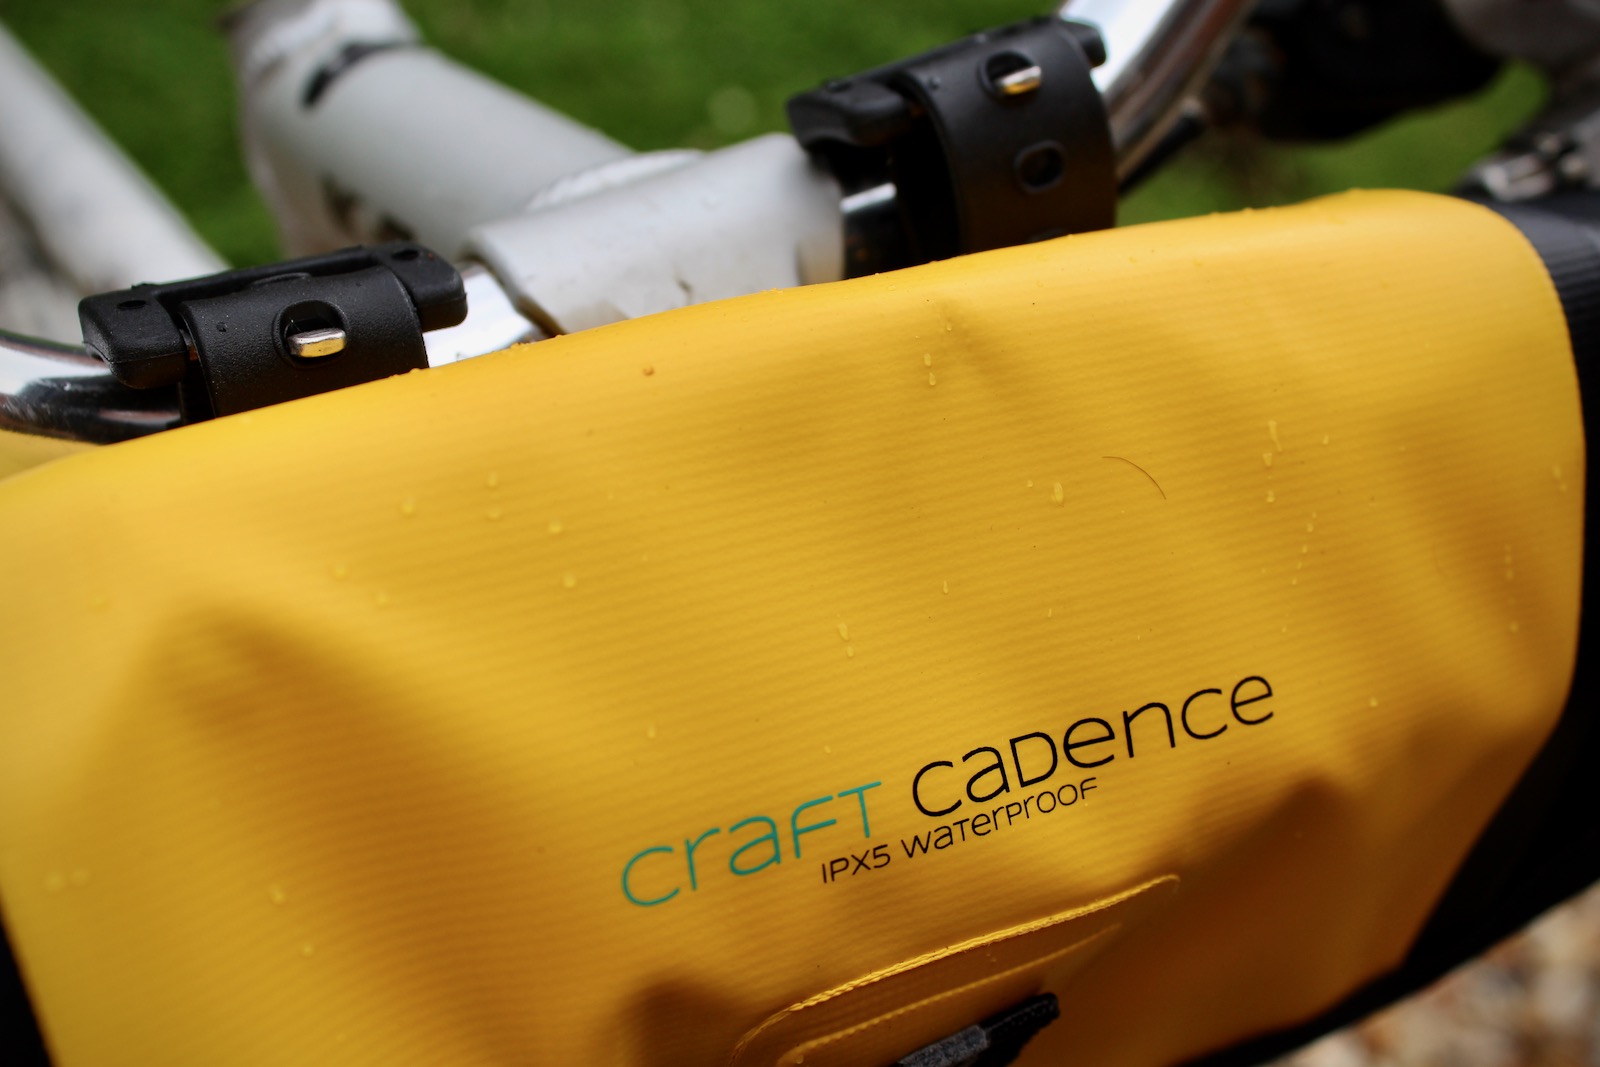 Review Craft Cadence Small Waterproof Handlebar Bag